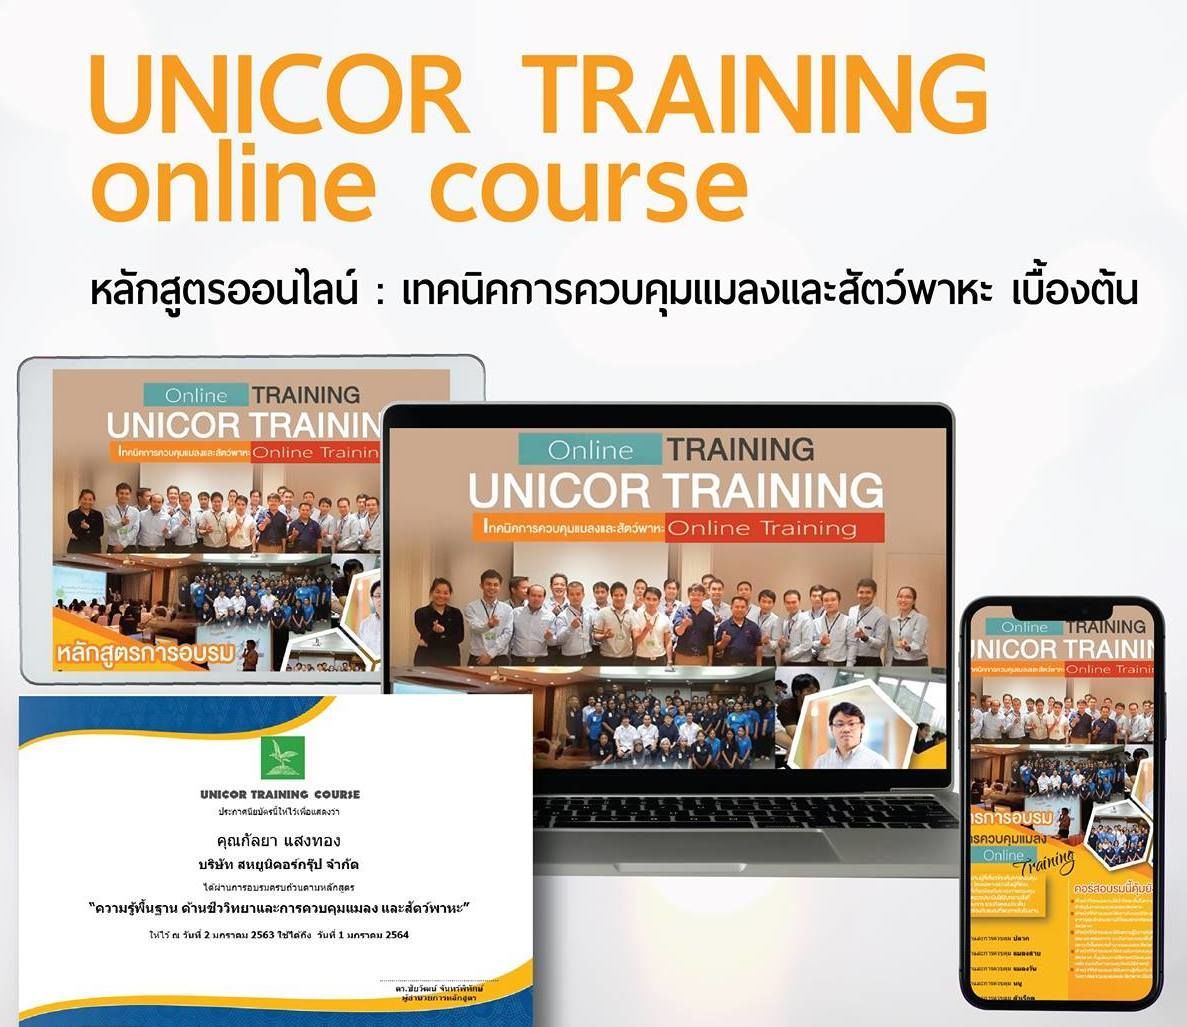 Unicor Training online course
หลักสูตร : เทคนิคการควบคุมแมลงและสัตว์พาหะ เบื้องต้น